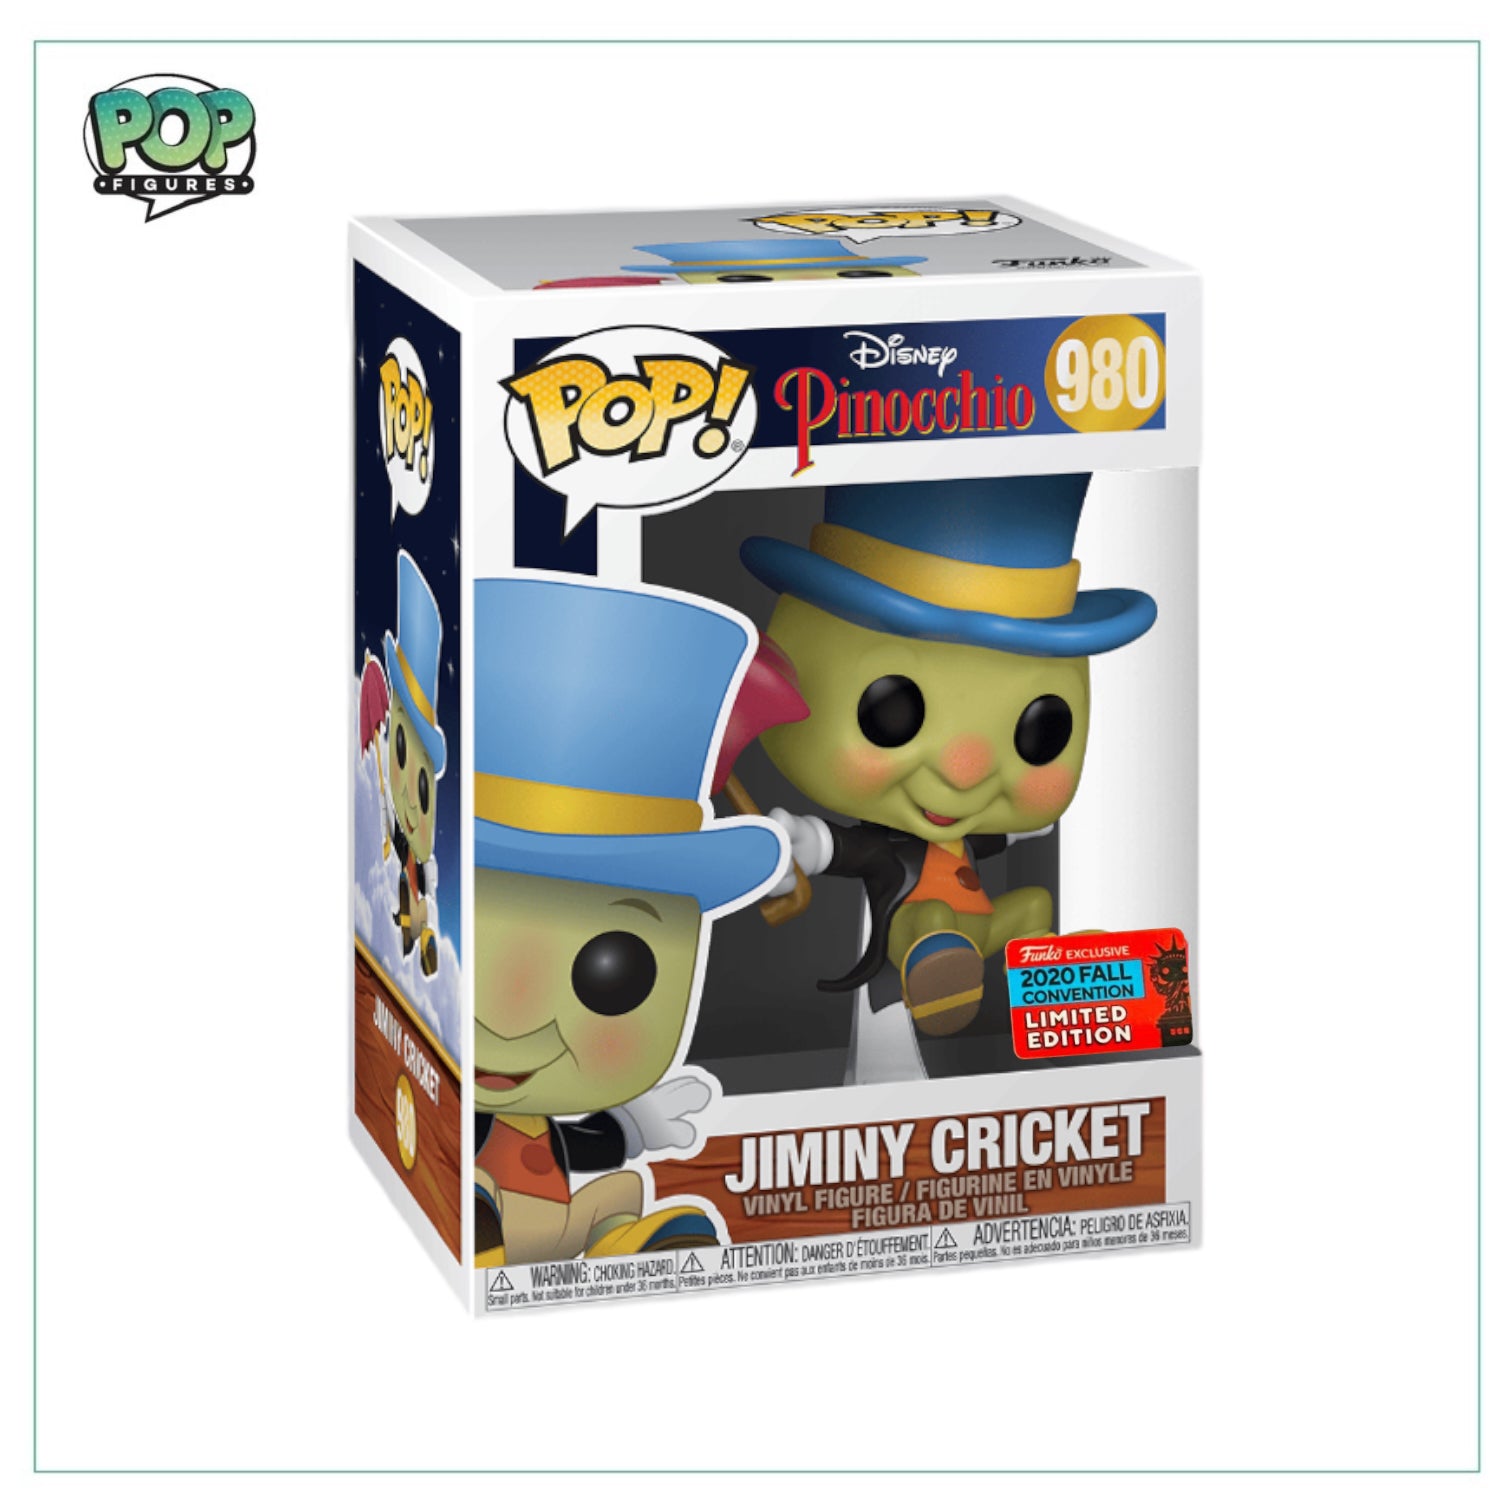 Jiminy Cricket #980 Funko Pop! - Pinocchio - 2020 NYCC Limited Edition